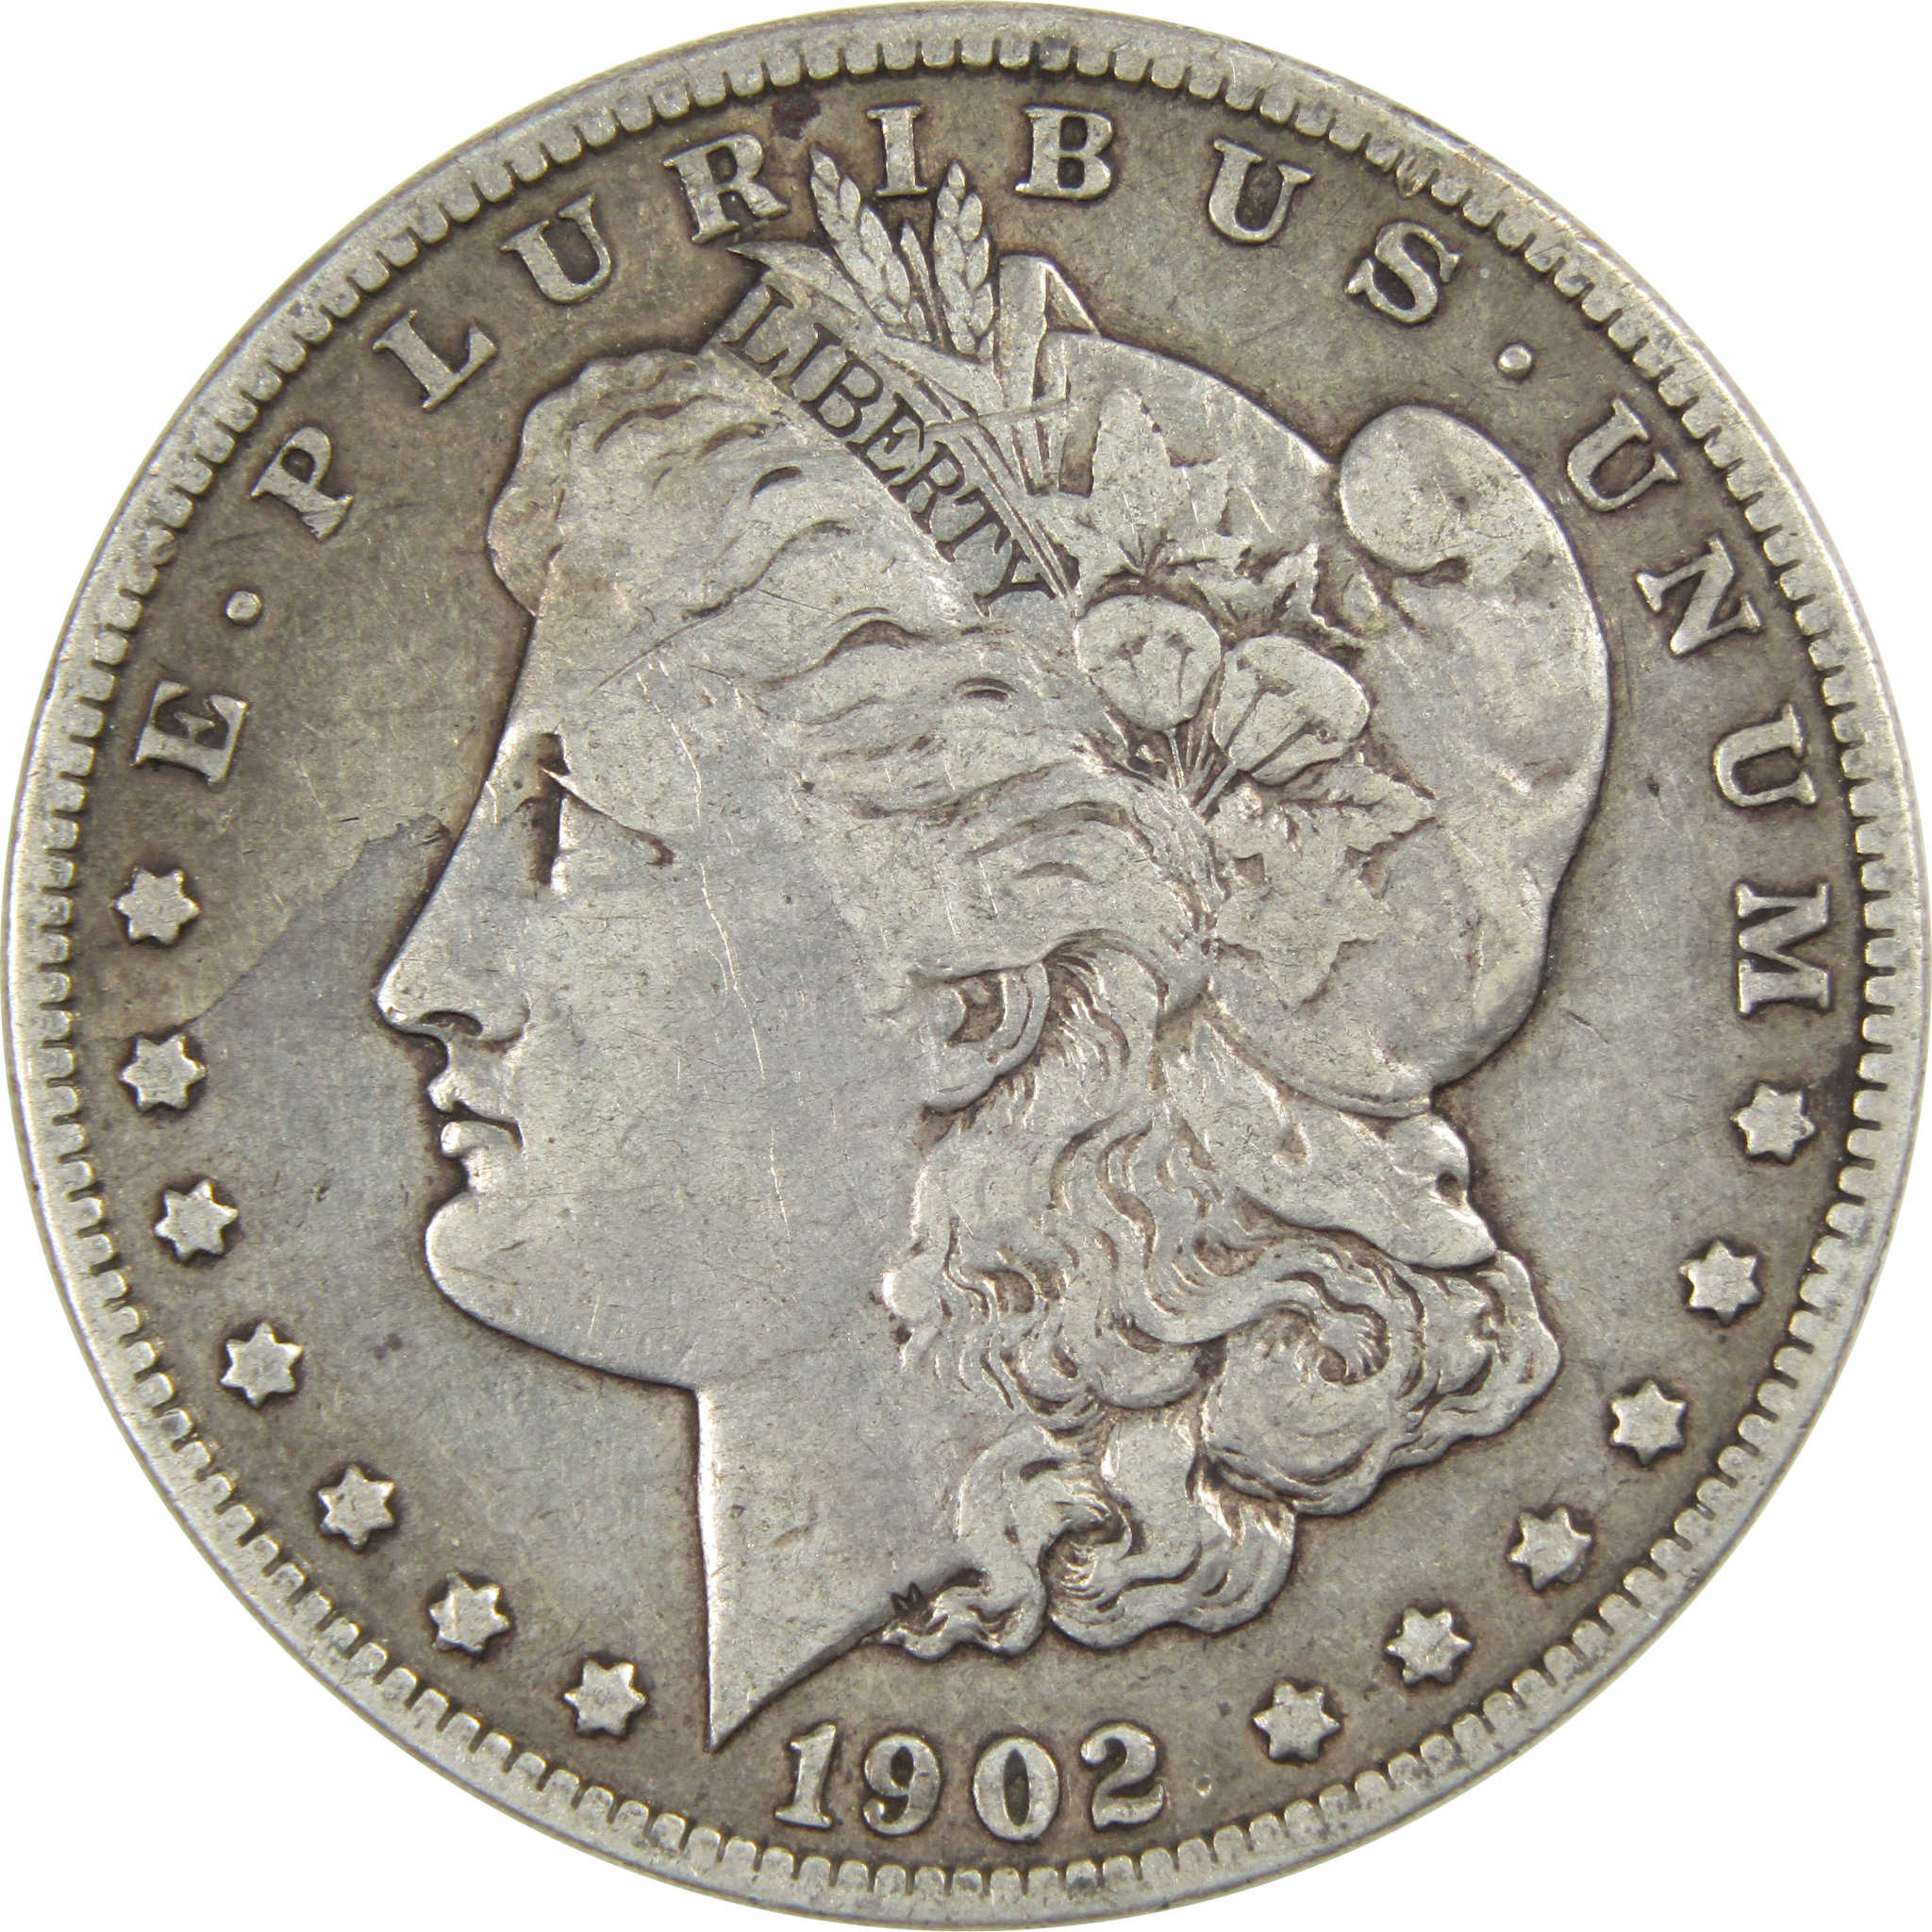 1902 Morgan Dollar F Fine 90% Silver $1 US Coin Collectible SKU:I3815 - Morgan coin - Morgan silver dollar - Morgan silver dollar for sale - Profile Coins &amp; Collectibles